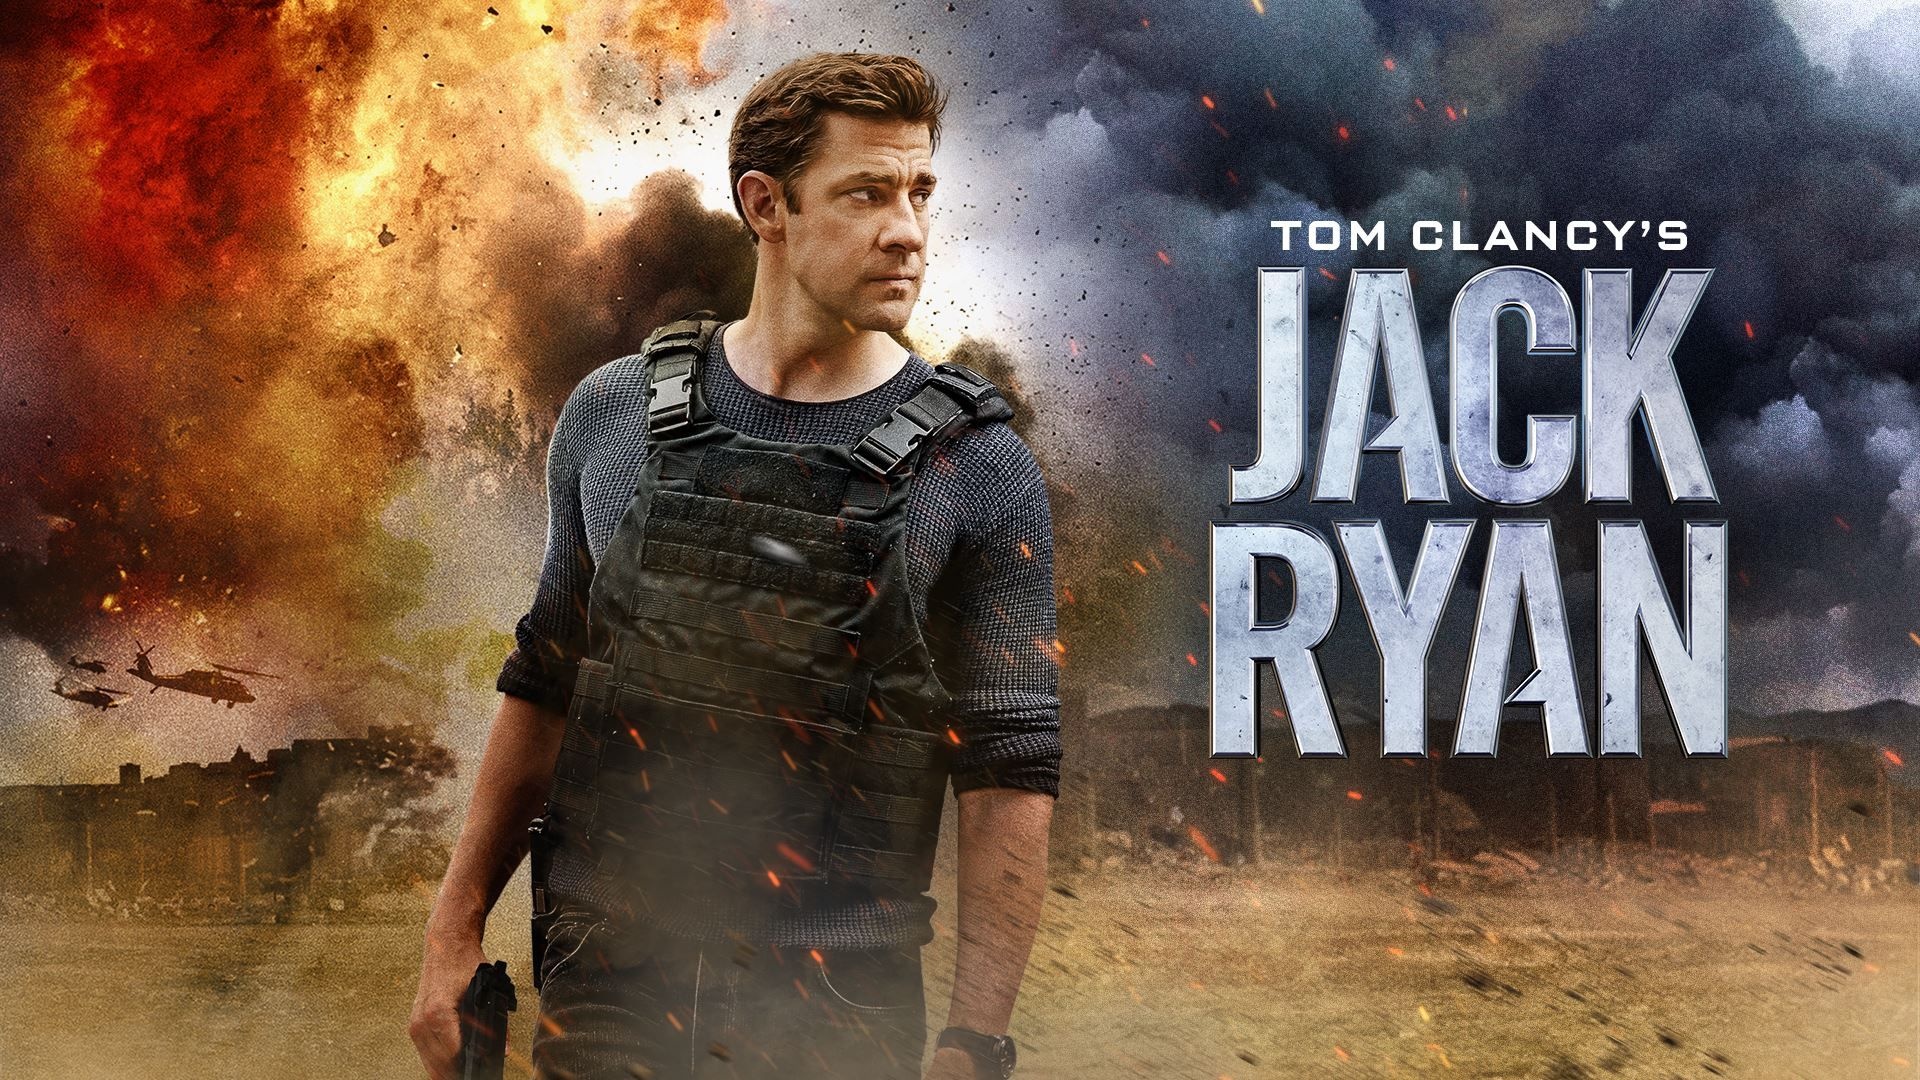 Jack Ryan (TV Shows), Tom Clancy's, HD wallpapers, Artistic backgrounds, 1920x1080 Full HD Desktop